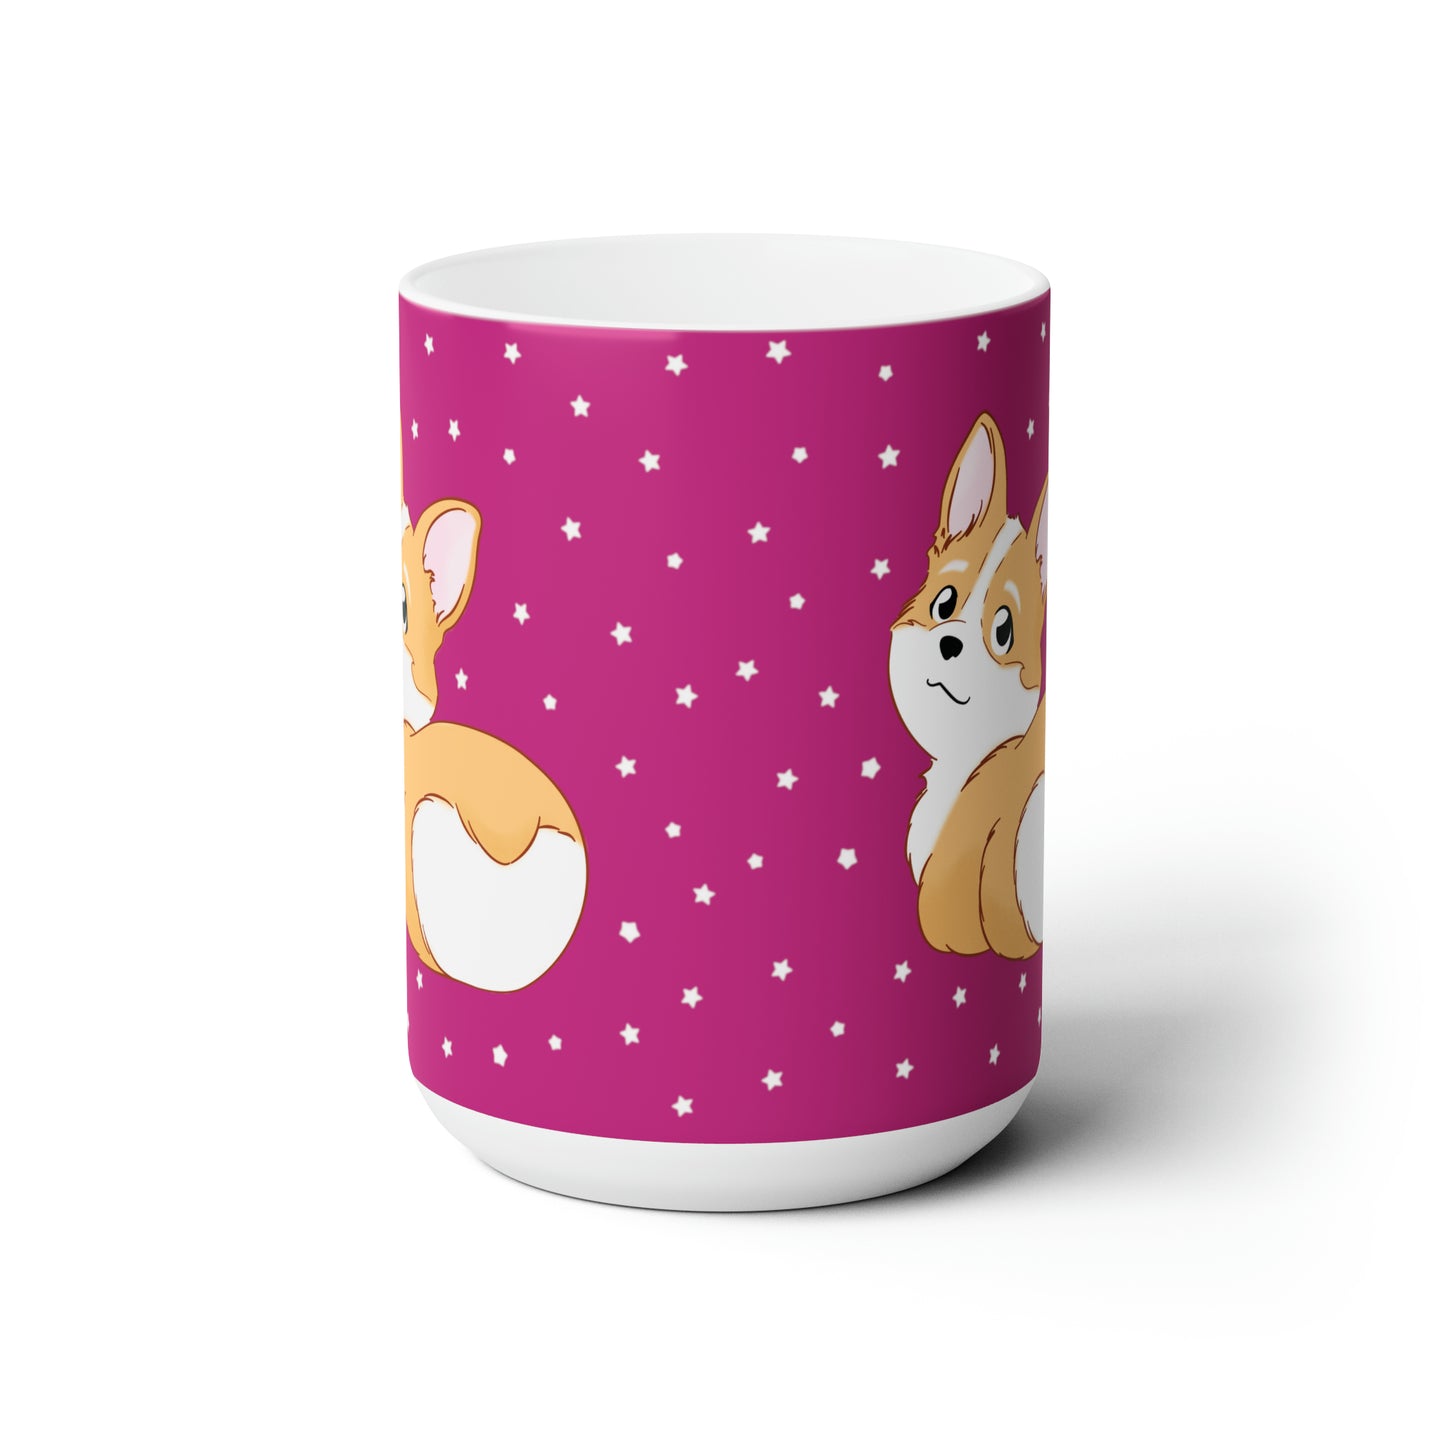 Corgi Butt Ceramic Mug in Pink with stars - single design 15oz